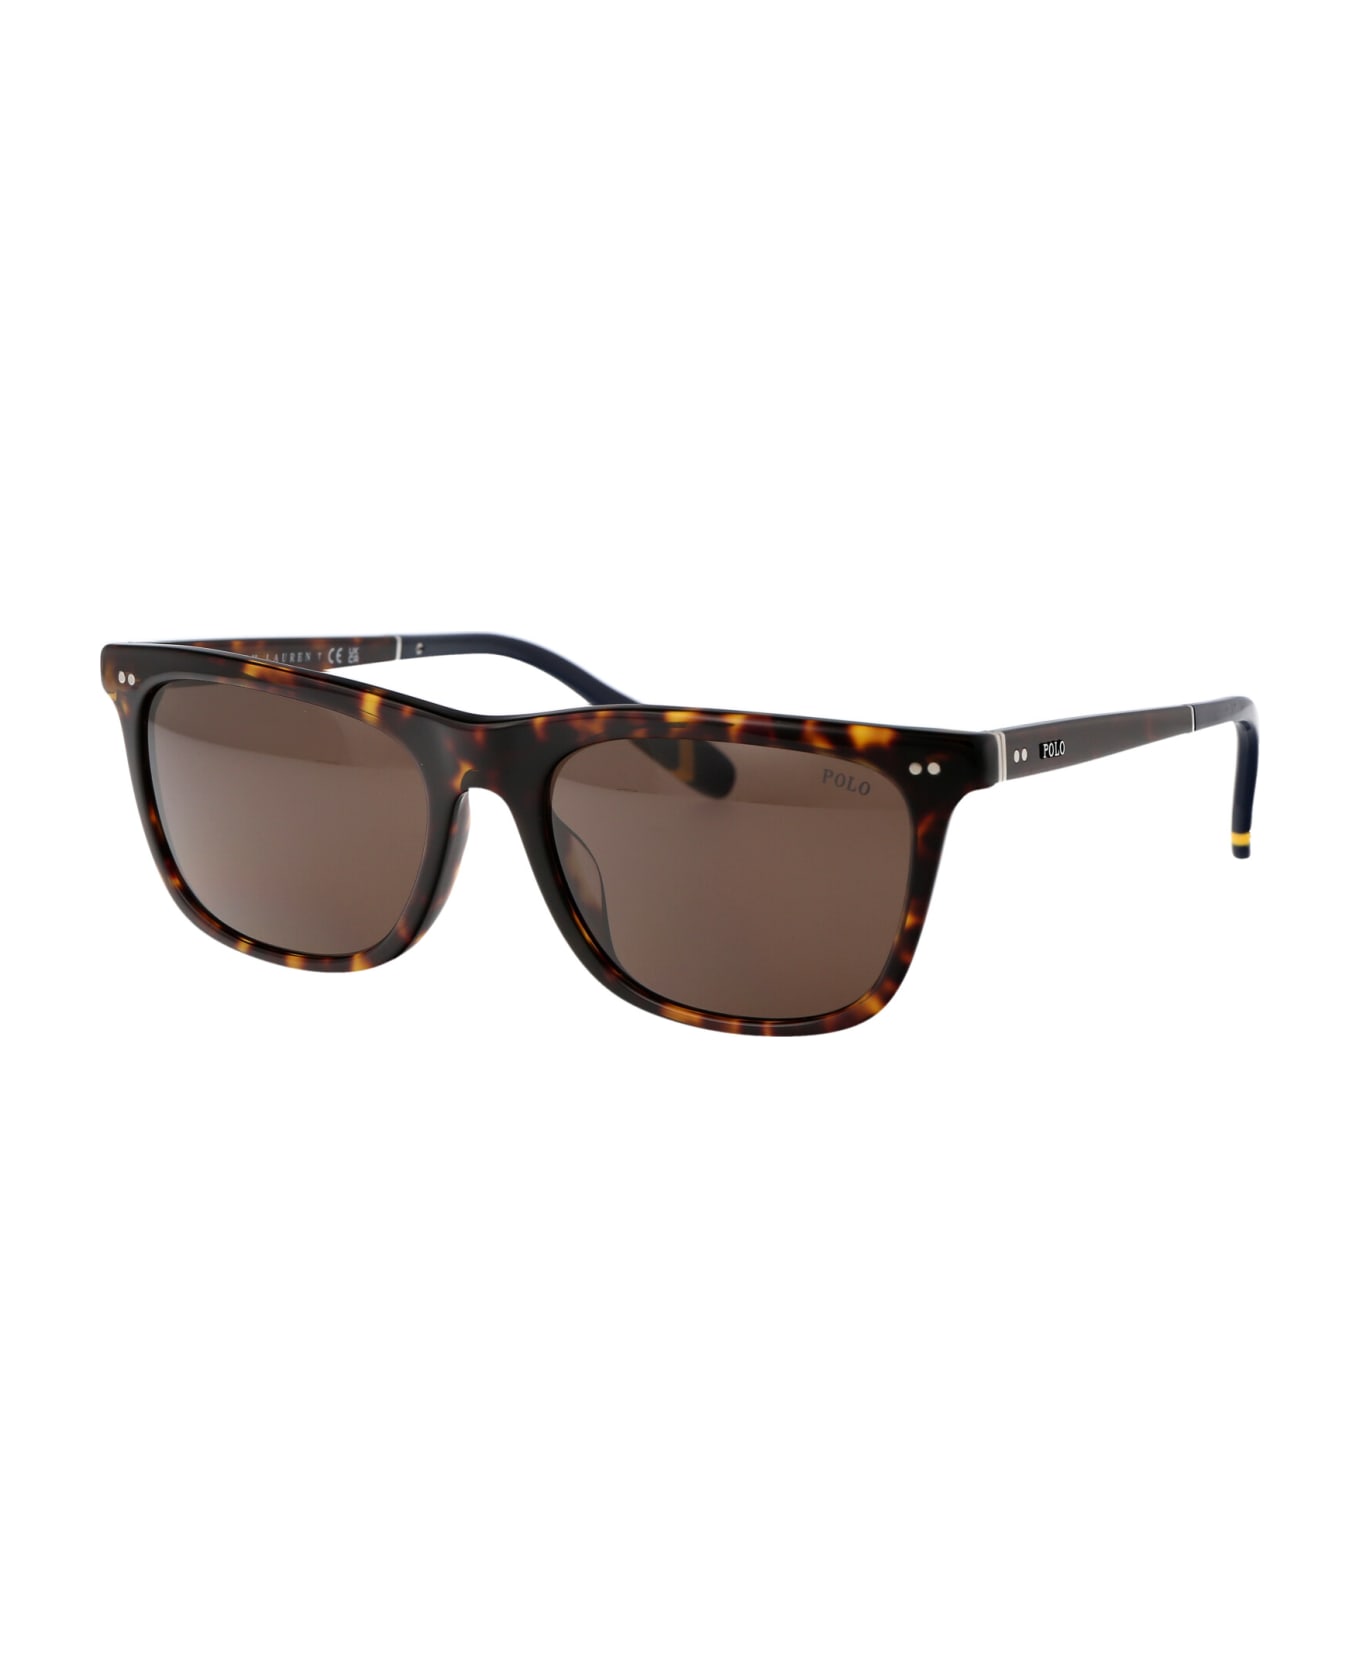 Polo Ralph Lauren 0ph4205u Sunglasses - 500373 Shiny Dark Havana サングラス